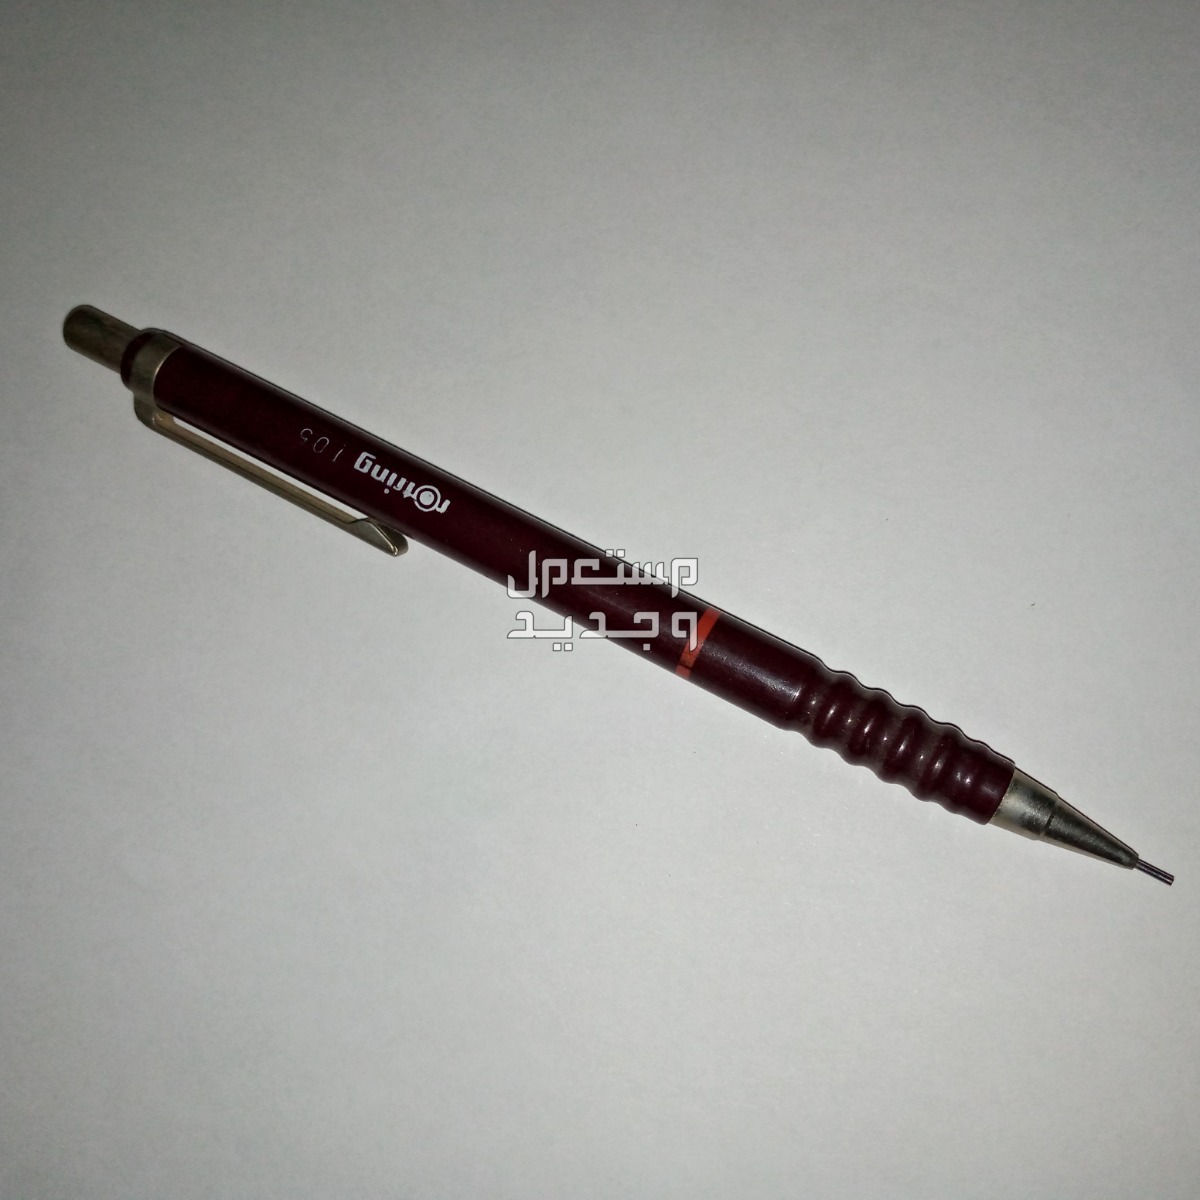 Rotring قلم رصاص سنون روترنج  0.5 مم  صناعة المانى لون مميز ونادر انظر الصور Rotring قلم رصاص سنون روترنج  0.5 مم  صناعة المانى لون مميز ونادر انظر الصور